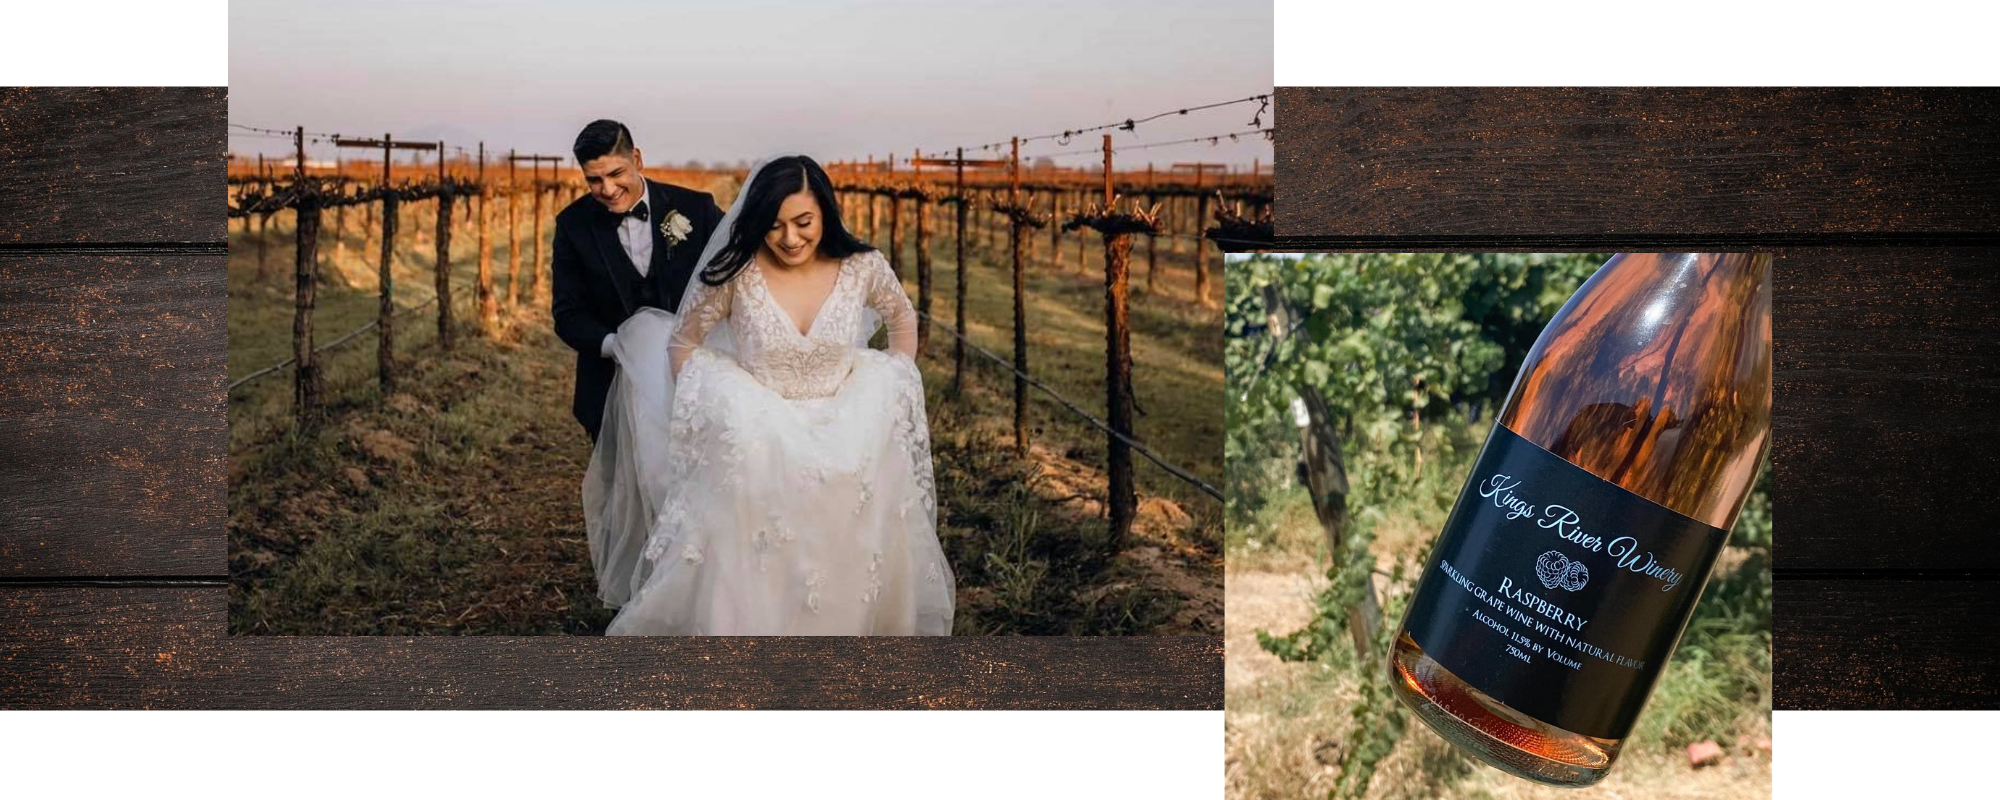 bride and groom in vineyard and bottle of raspberry wine